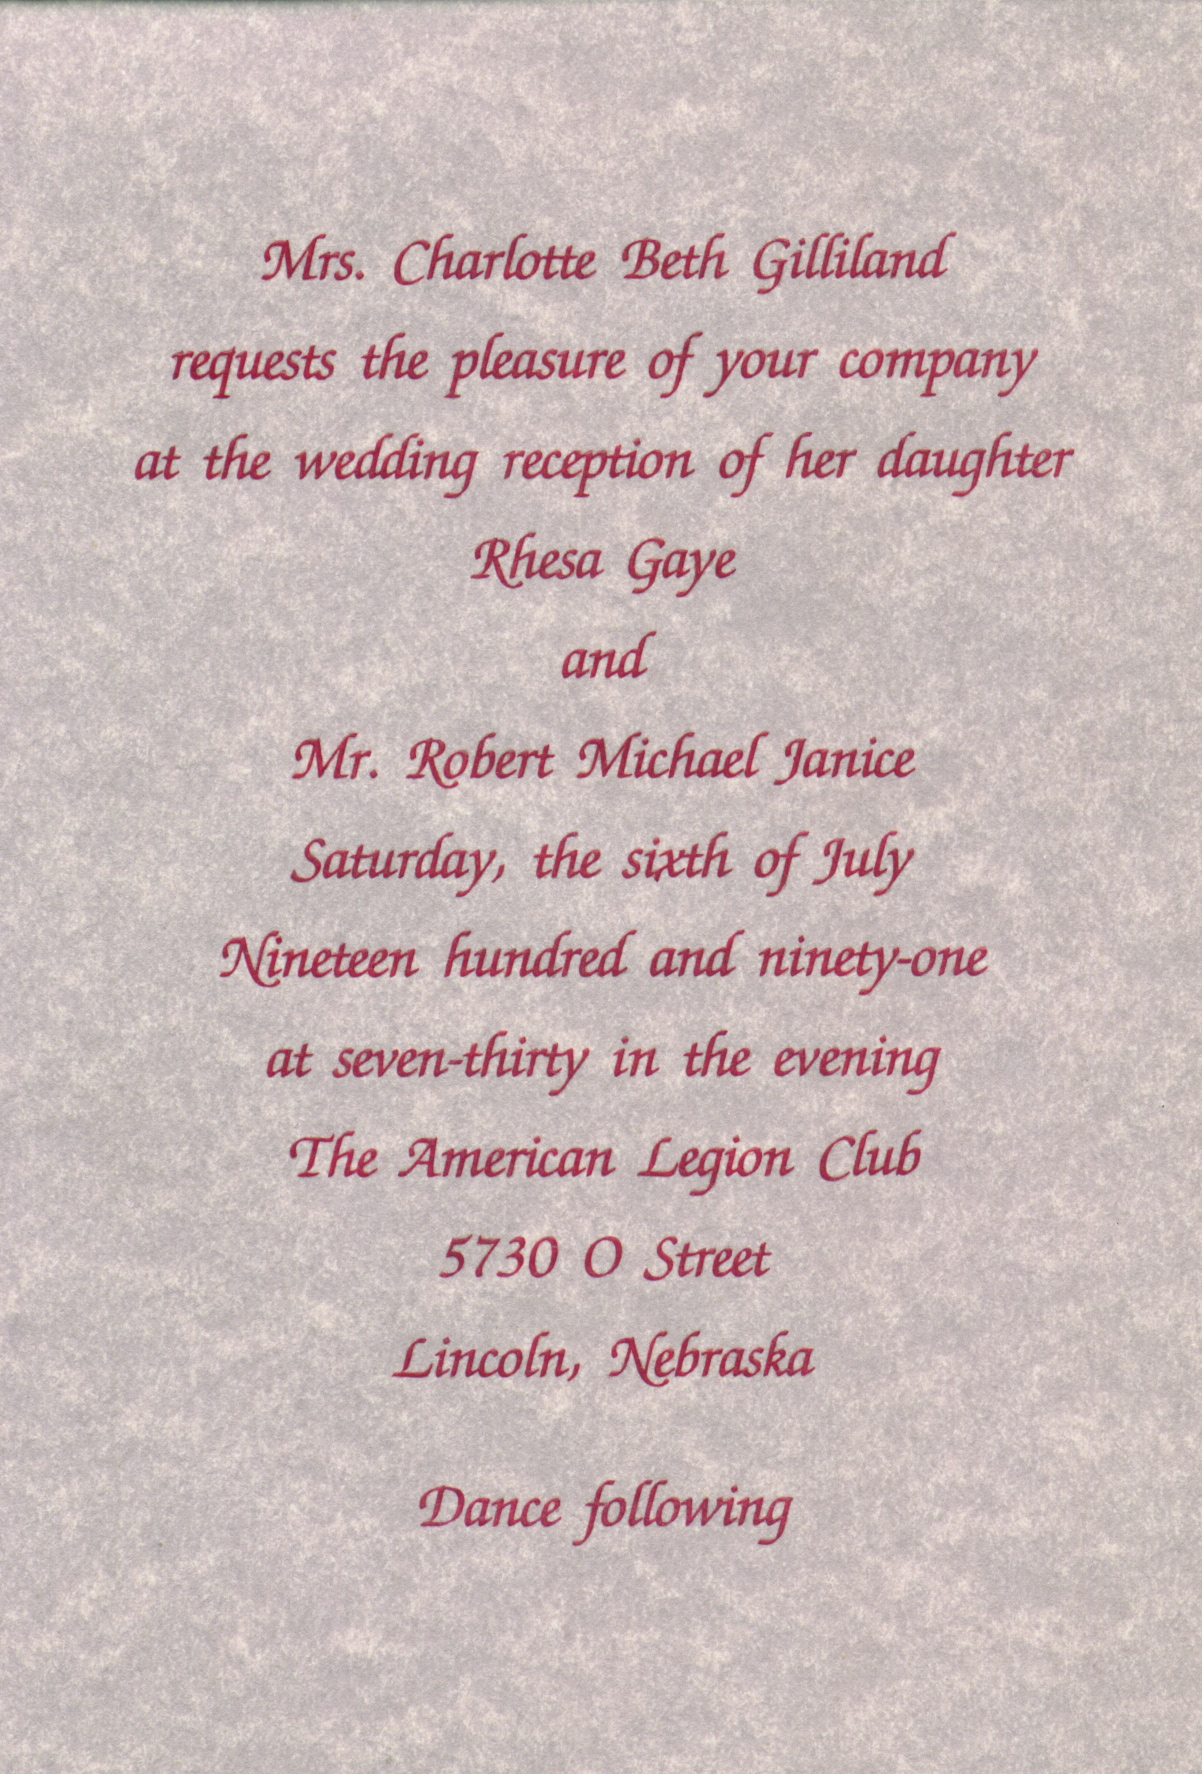 Rhesa G Gilliland and Robert M Janice - Wedding Invitation.jpg